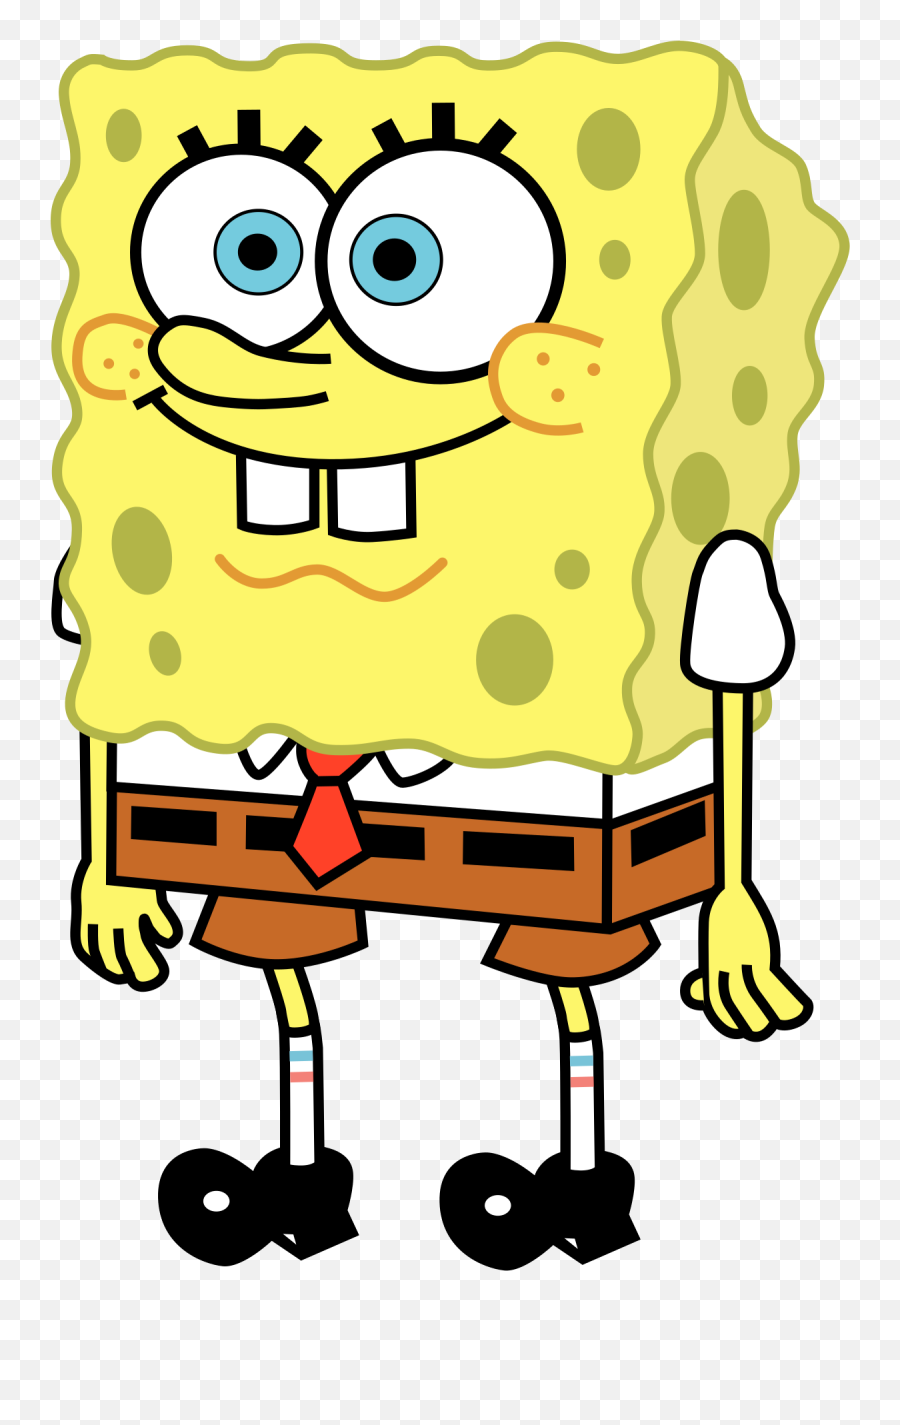 Spongebob Squarepants Character Png 44244 - Free Icons Characters Spongebob Squarepants Nickelodeon,Spongebob Face Png